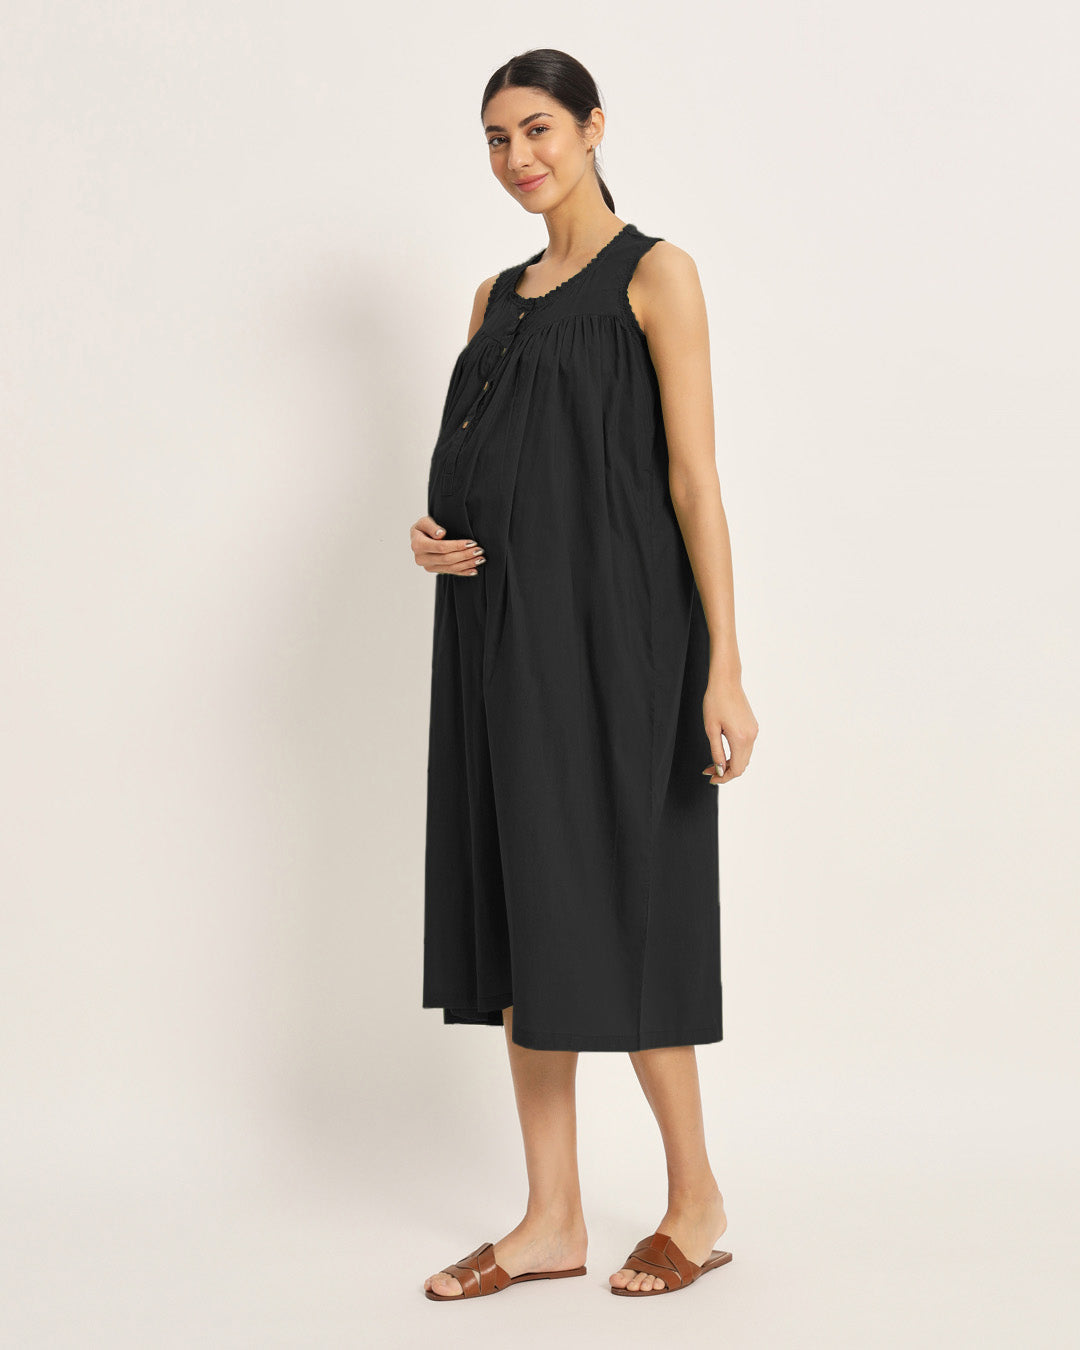 Combo: Black & Russet Red Pregnan-Queen Maternity & Nursing Dress